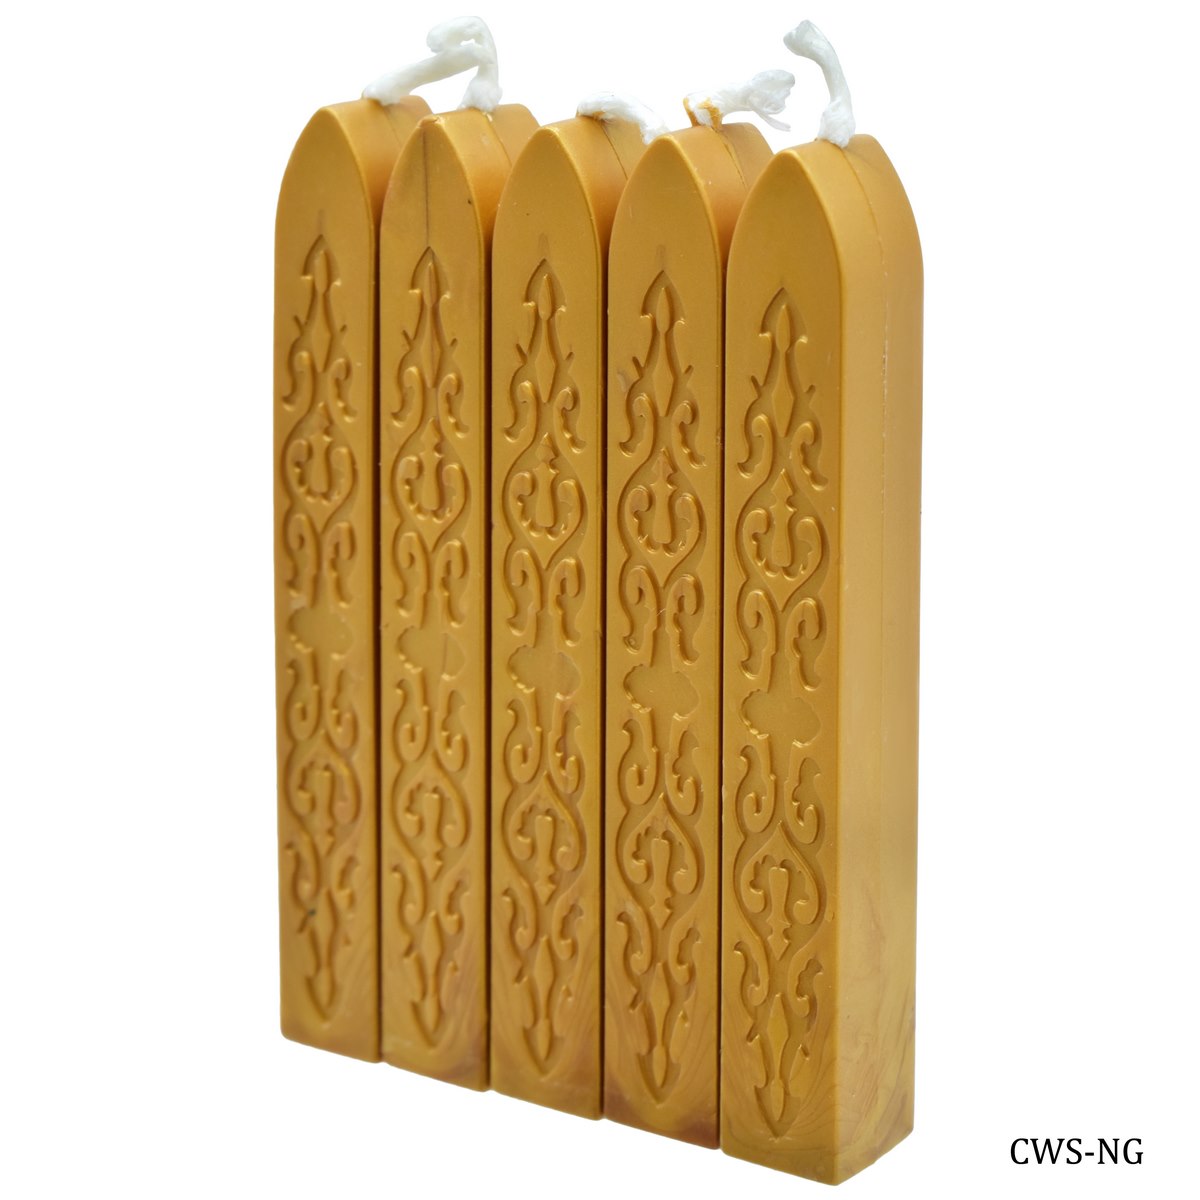 jags-mumbai Candle Sealing Wax Candle - Nutmeg (Contain 1 Unit)